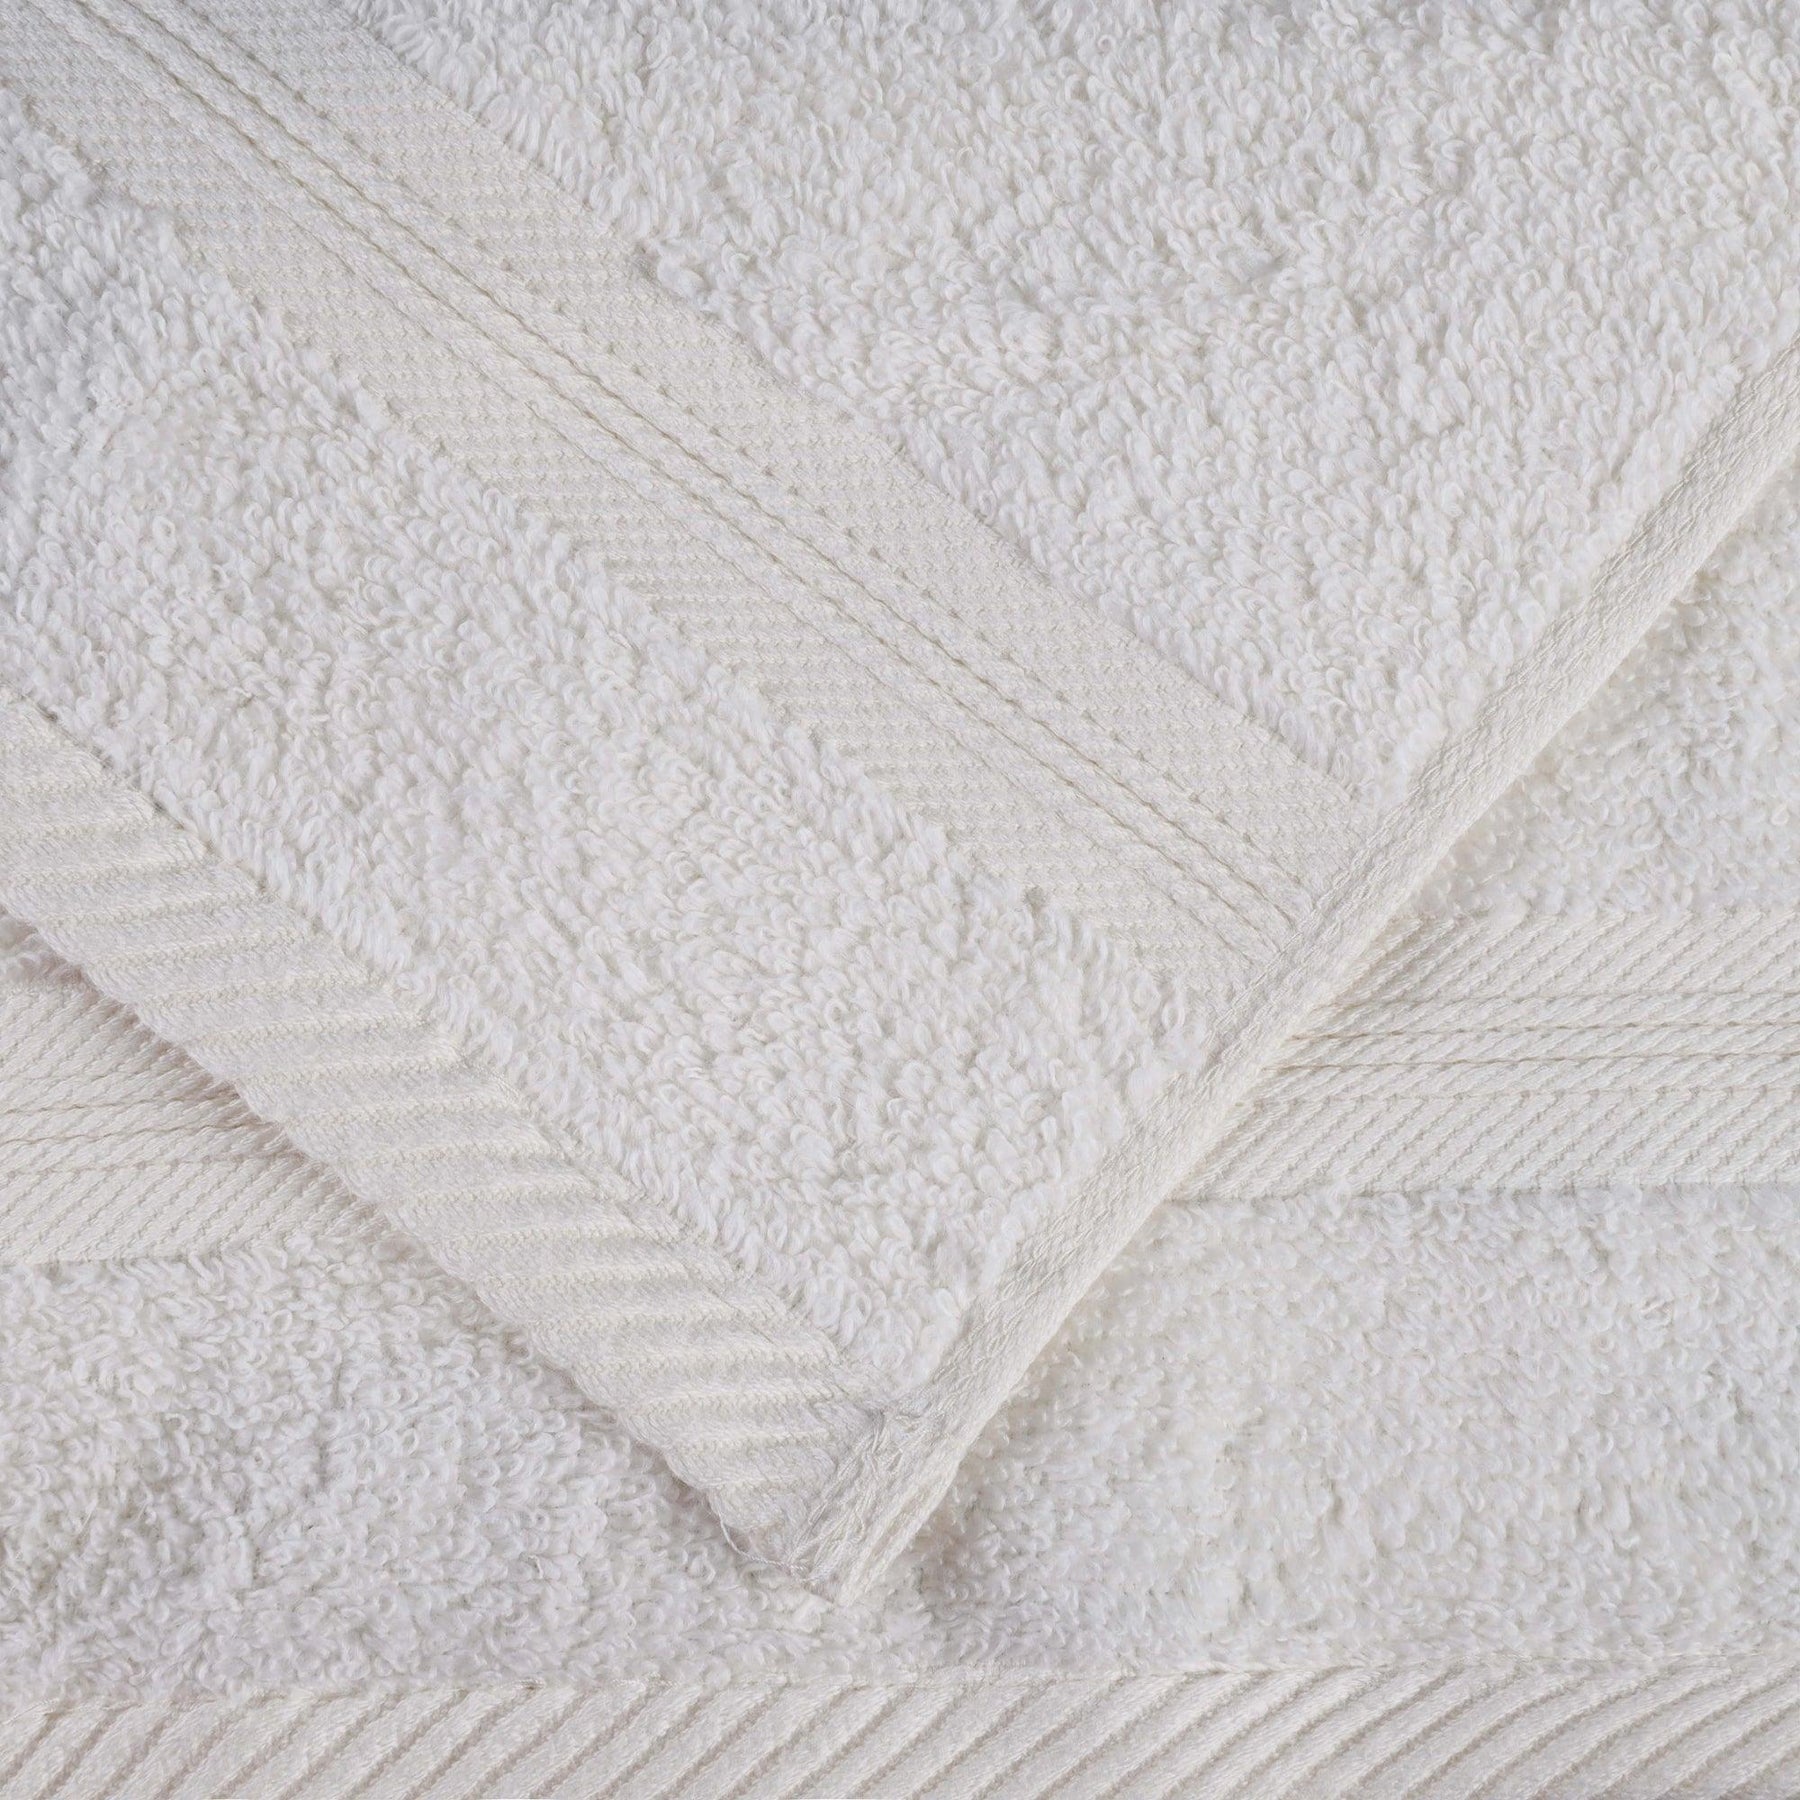  Superior Smart Dry Zero Twist Cotton 8-Piece Assorted Towel Set - Ivory